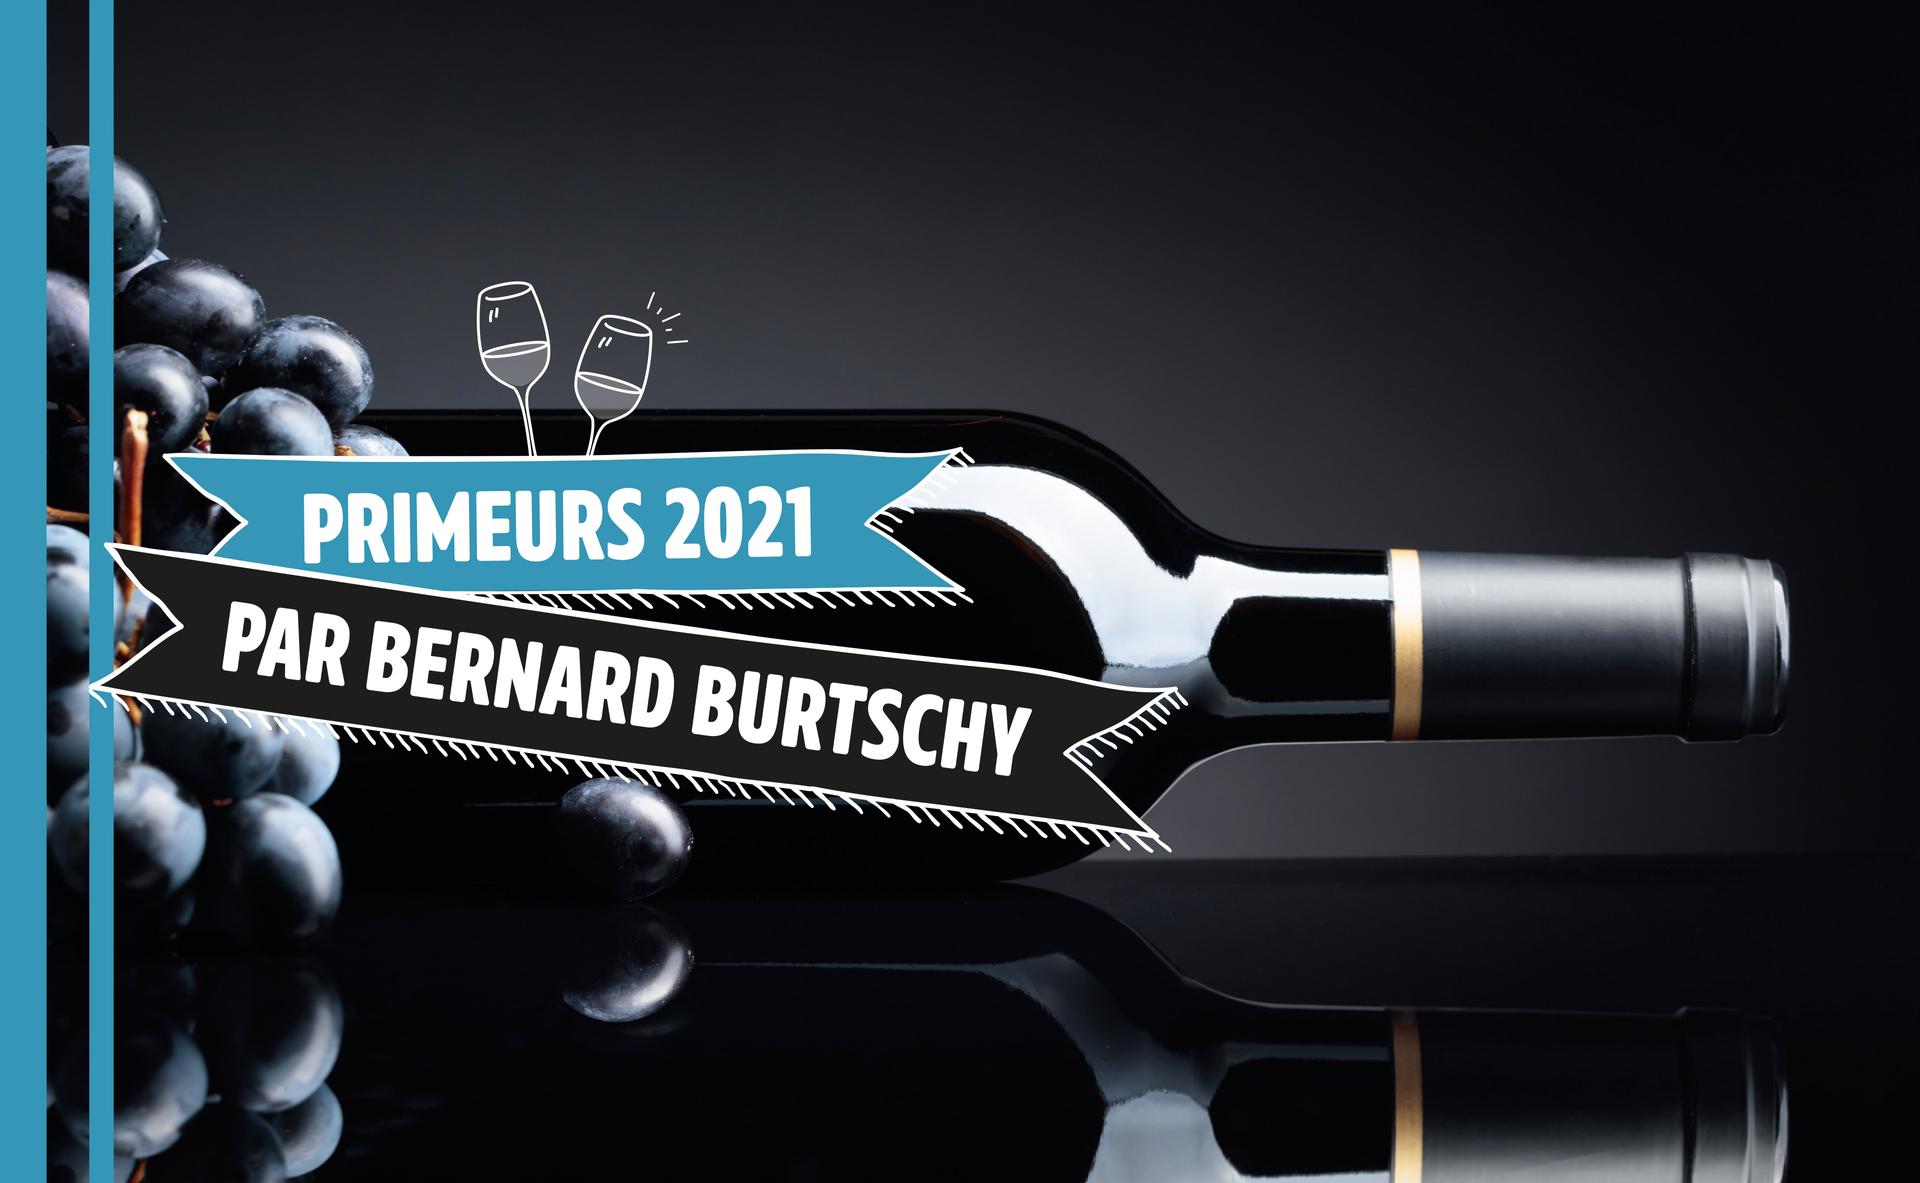 Bordeaux - Primeurs 2021 par Bernard Burtschy